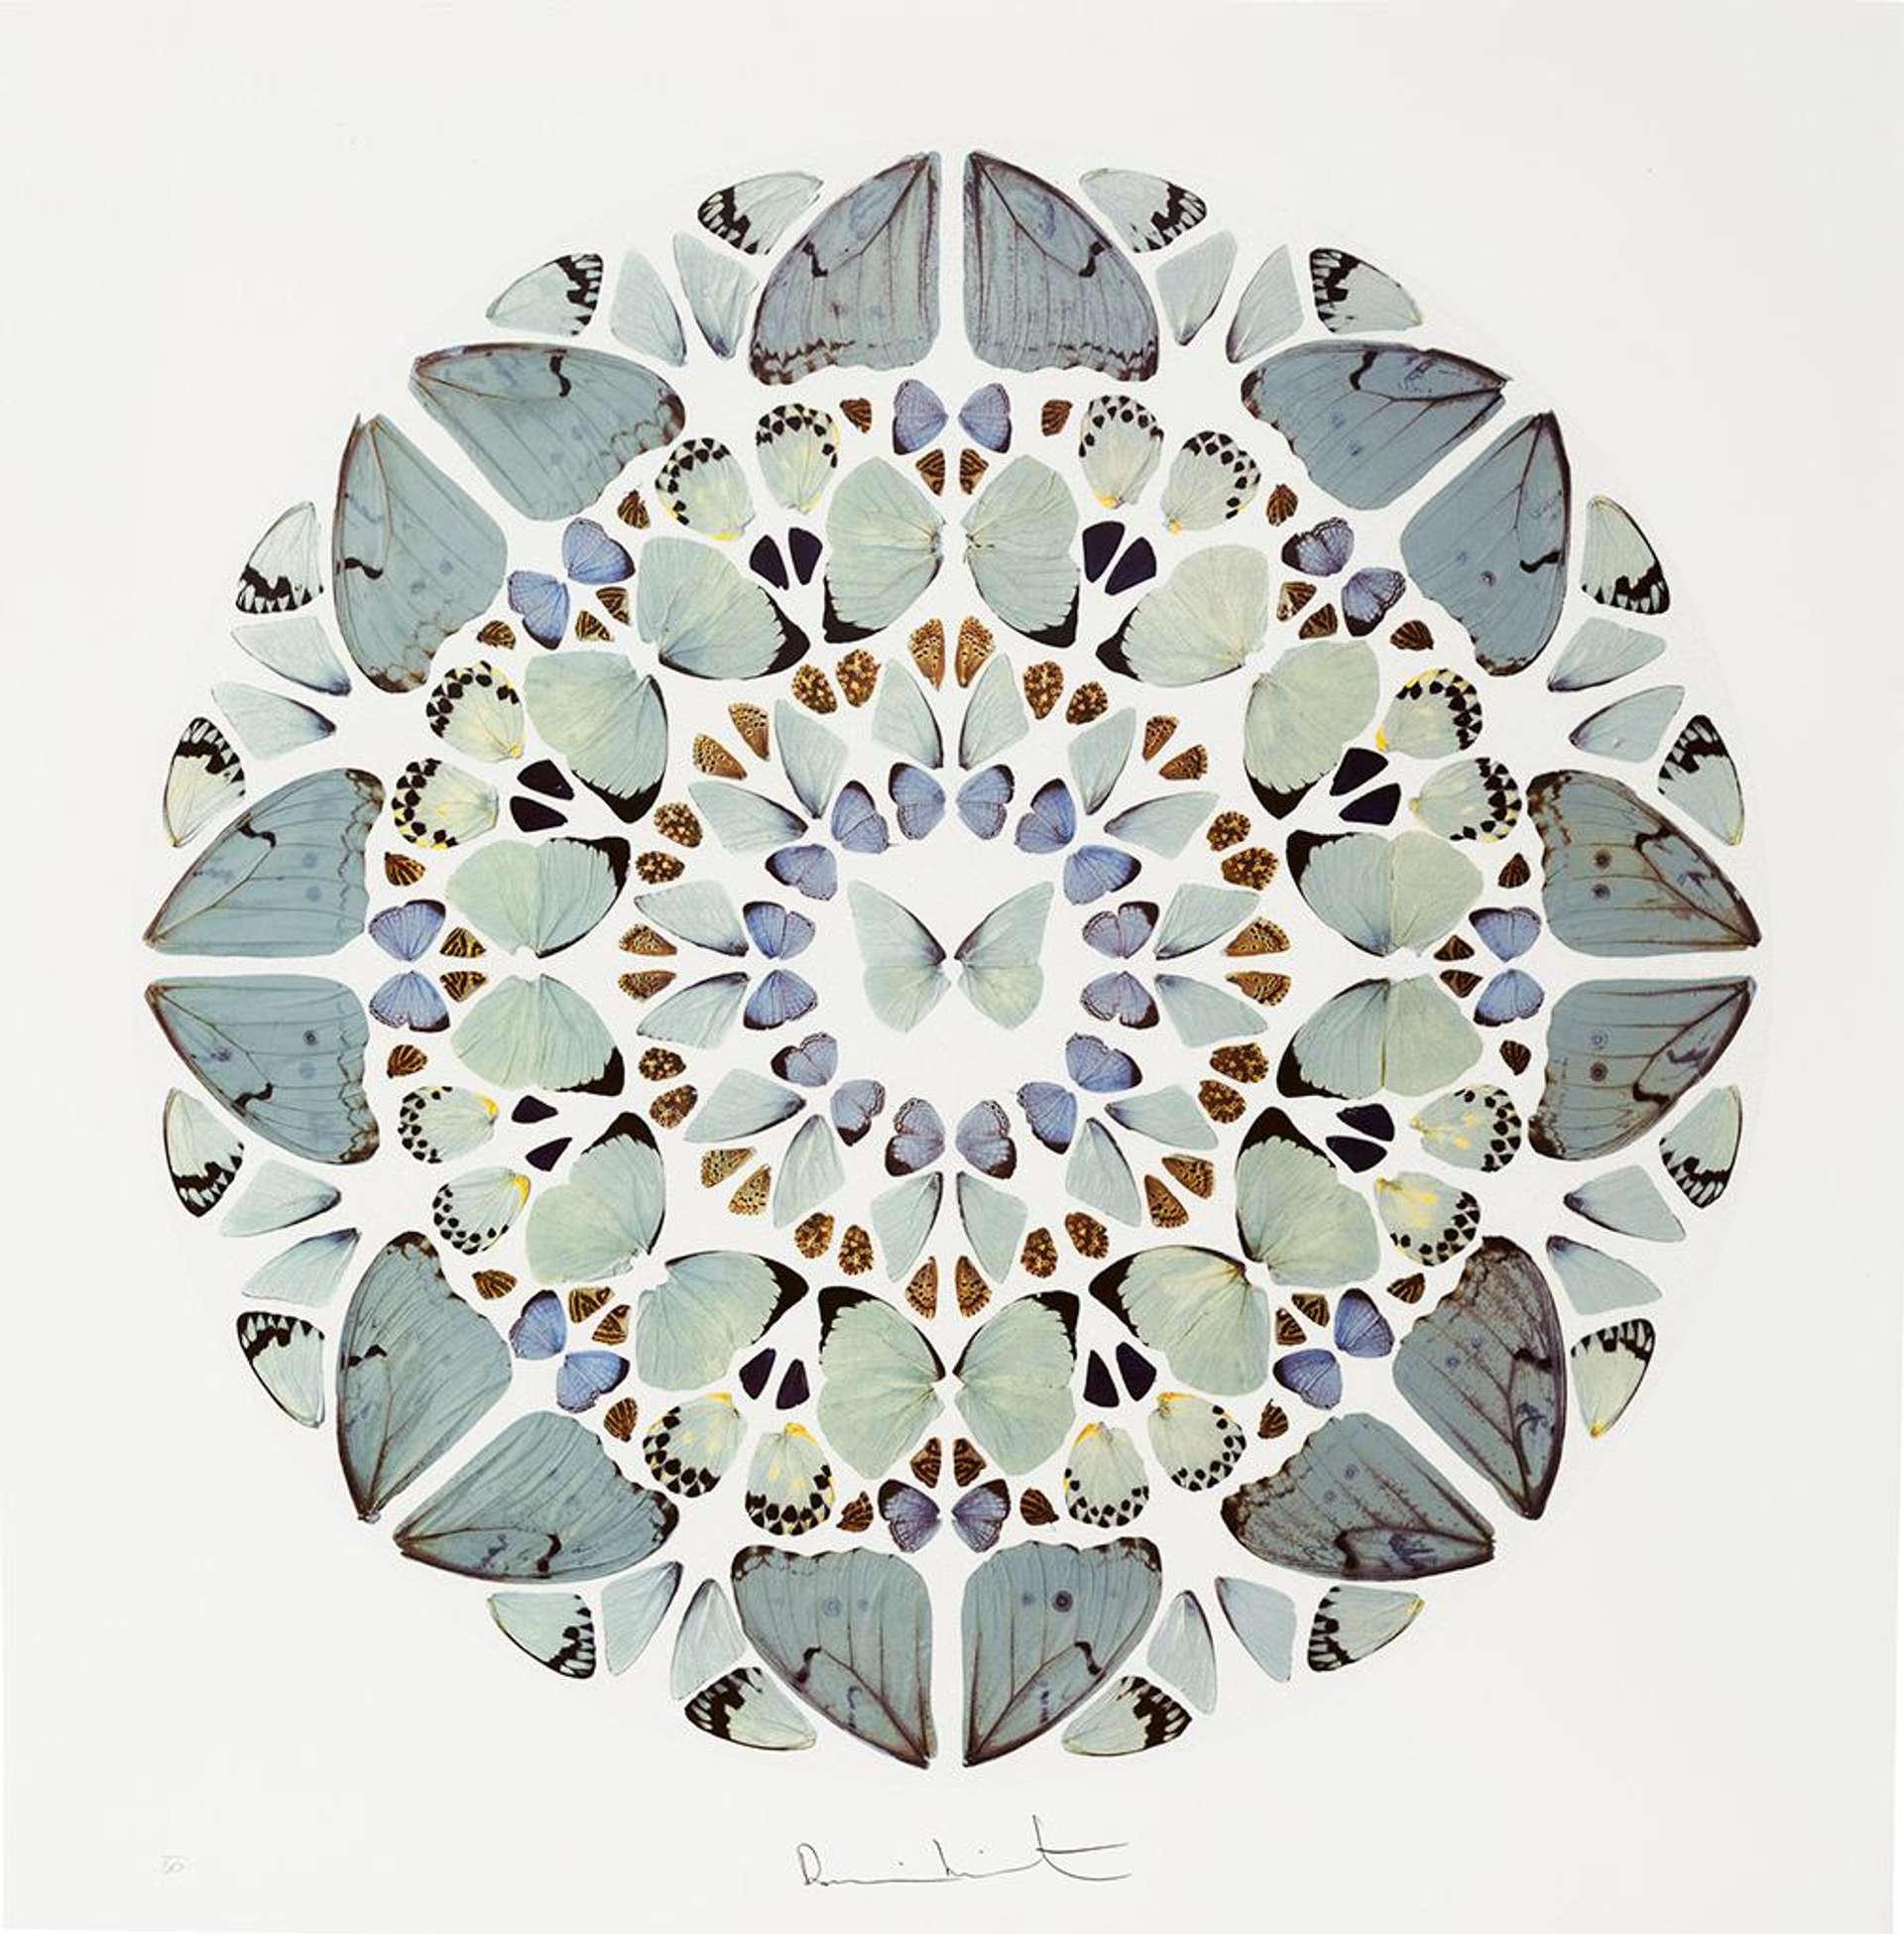 A print showing mandala-like arrangement of butterflies by artist Damien Hirst.